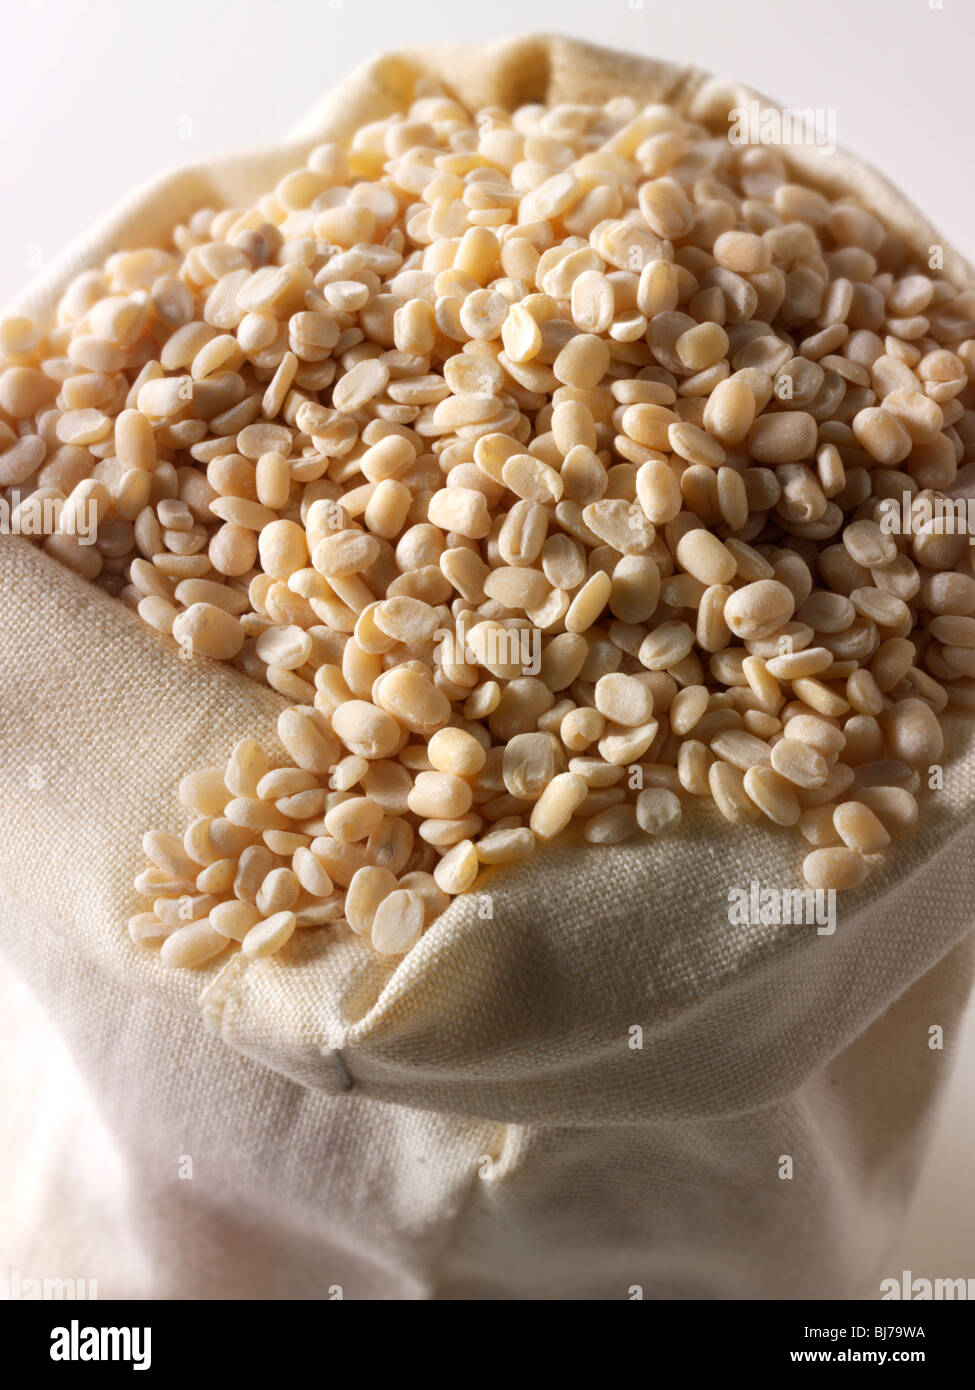 Whole dried urid dahl, urad dal, udad dal, urd bean, urd, urid, white lentil - close up in a bag Stock Photo